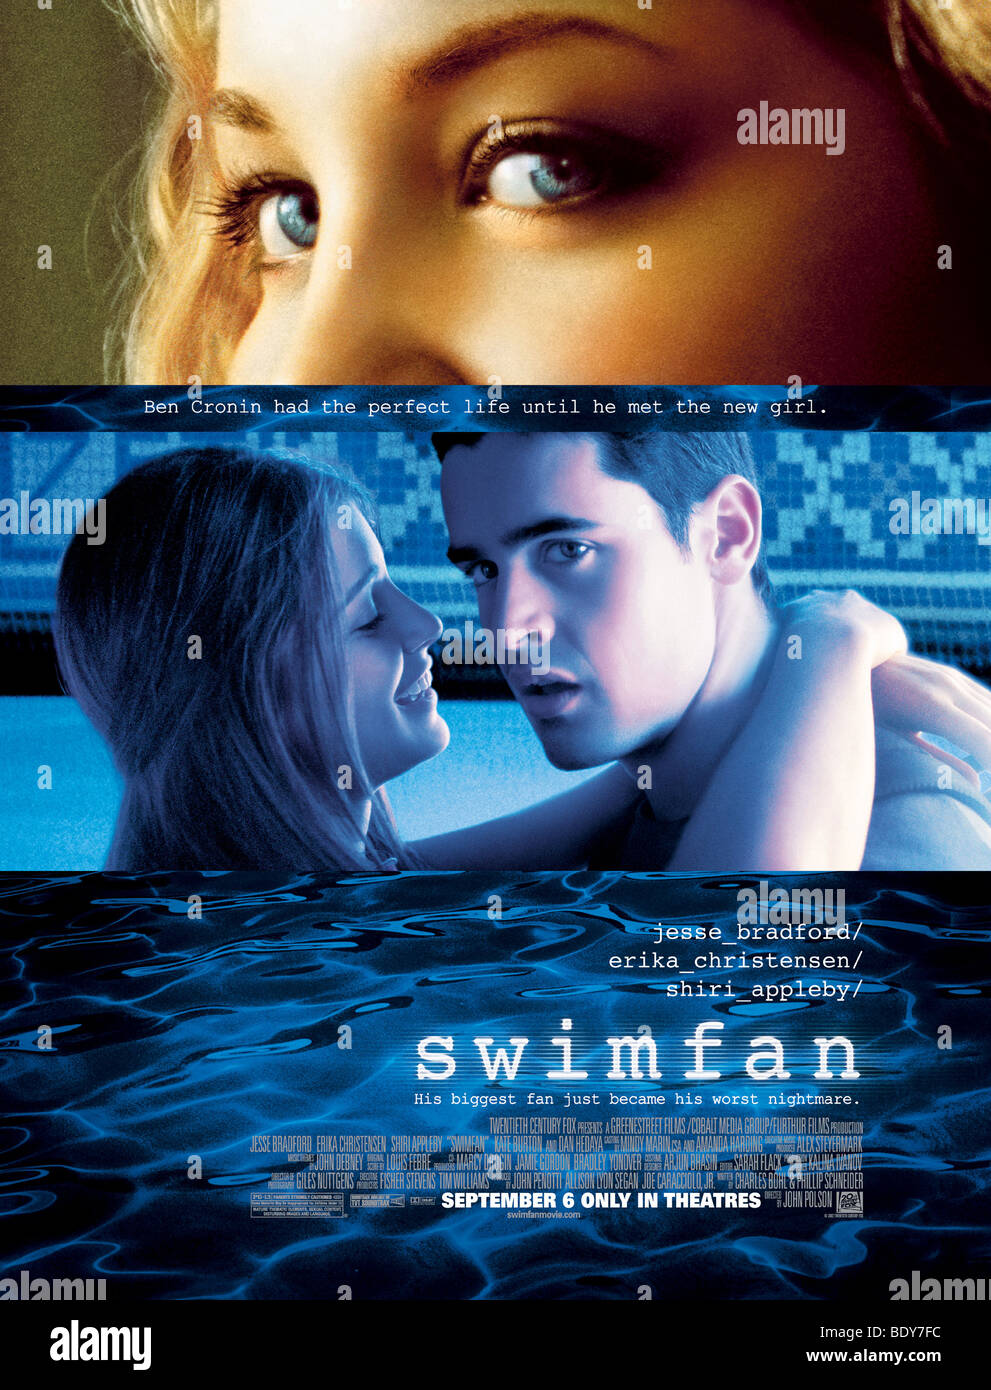 SWIMFAN  - Poster for 2002 Icon/Greenstreet film with Jesse Bradford as Ben and Erika Christensen as Madison Stock Photo